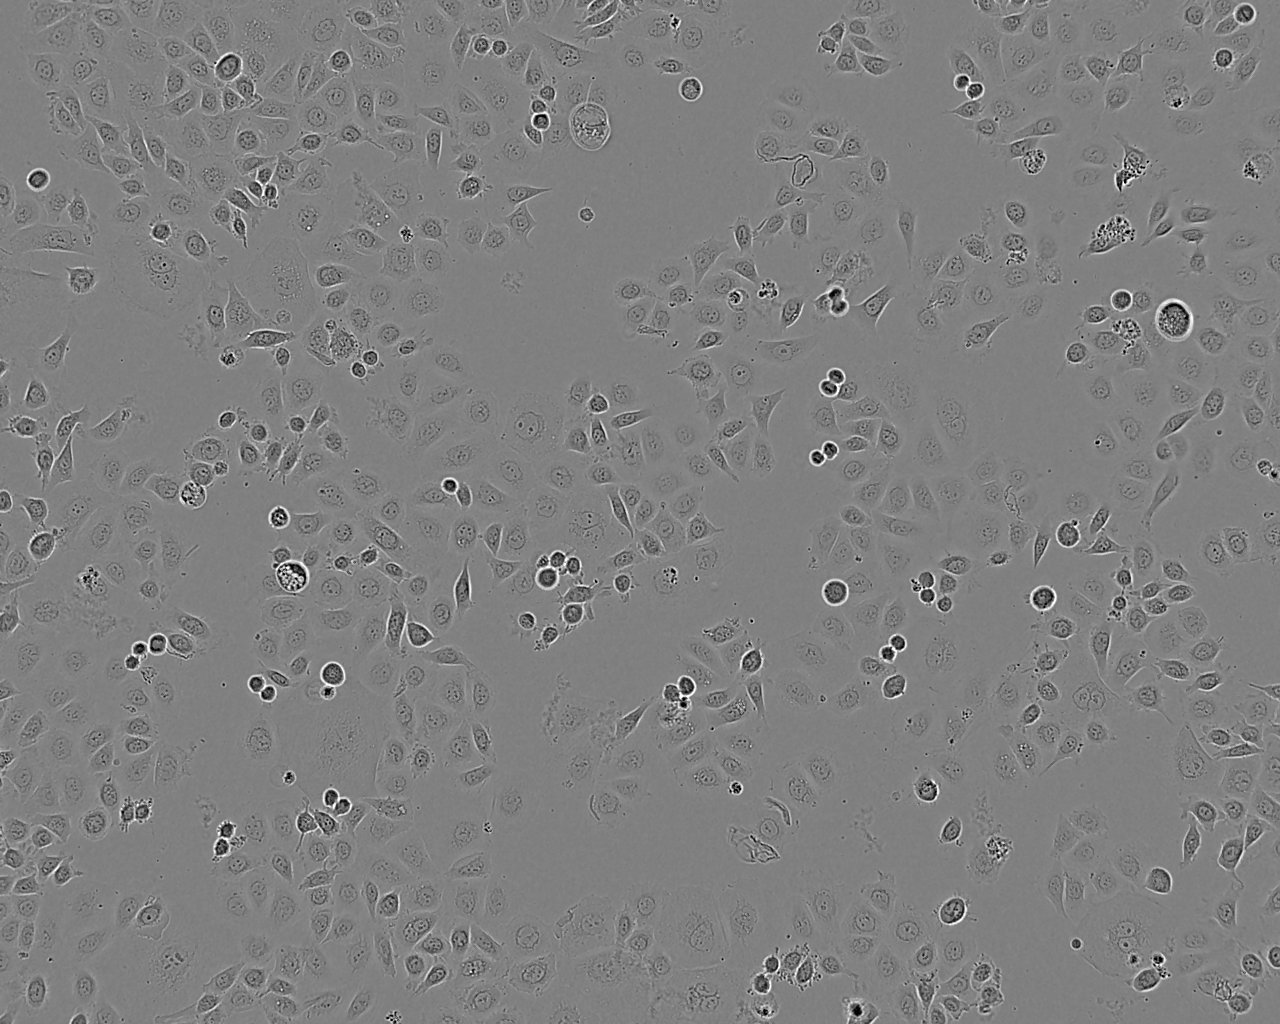 NCI-H358 epithelioid cells人非小细胞肺癌细胞系